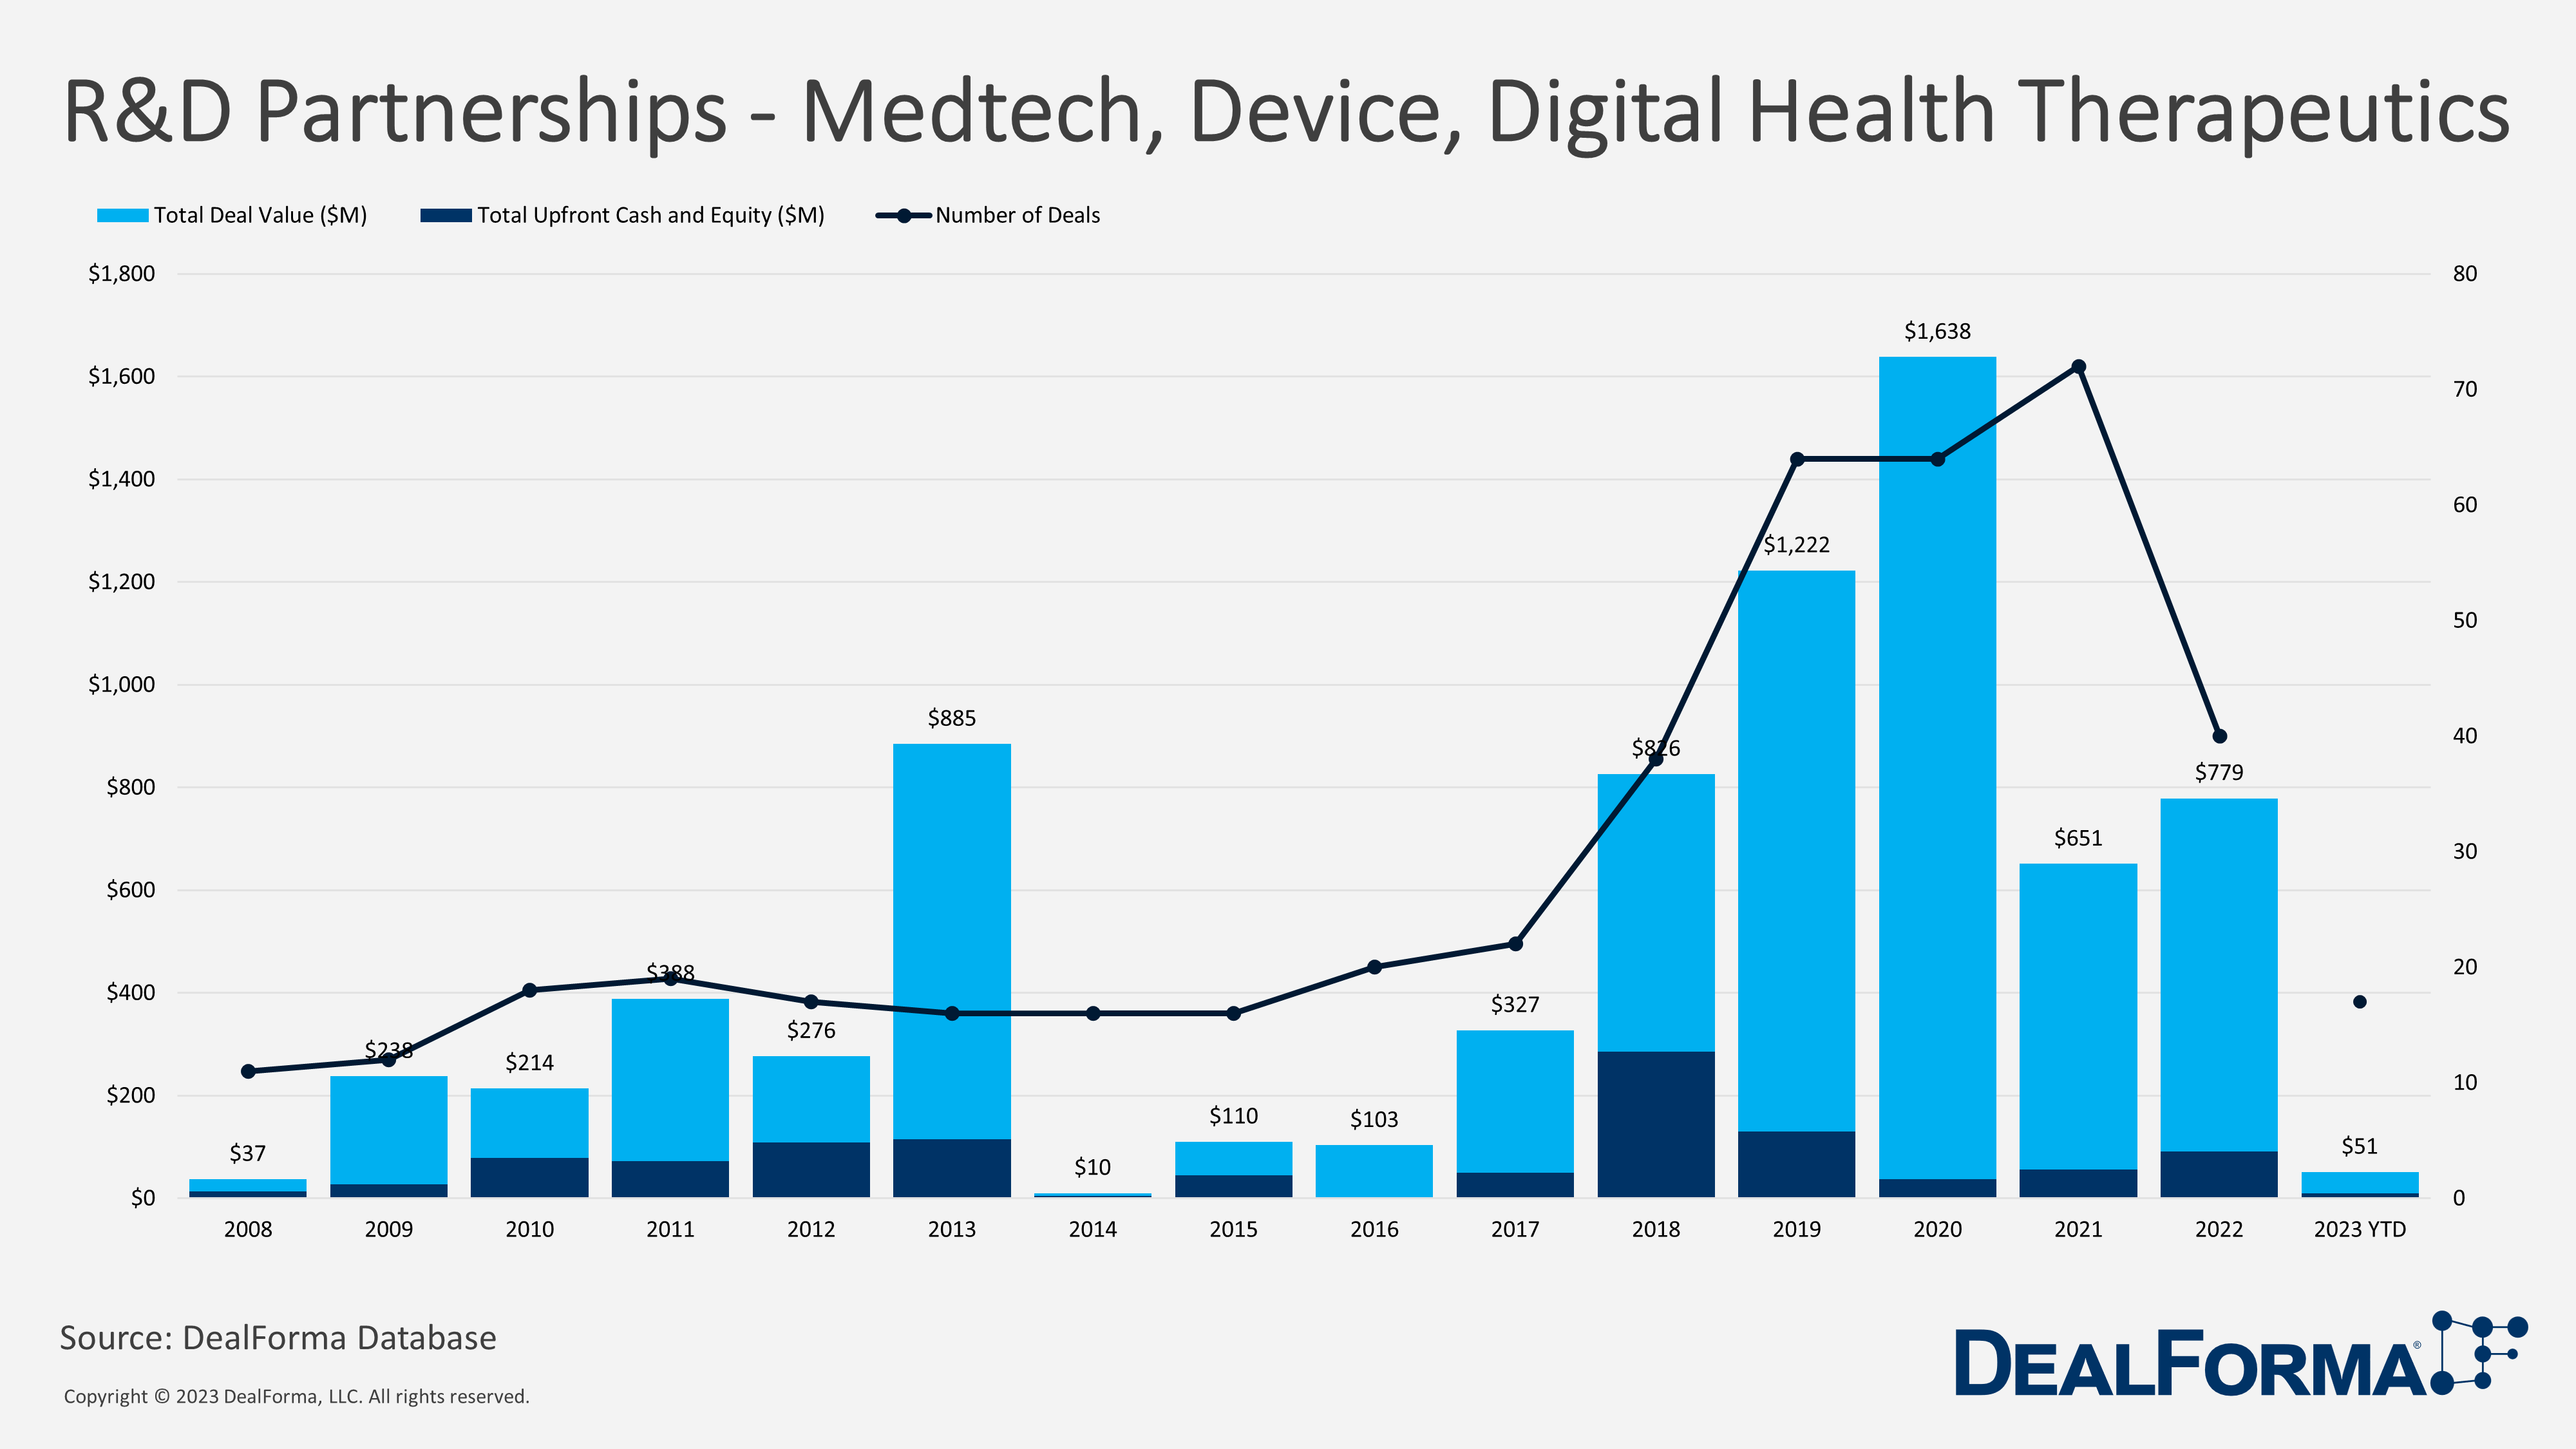 R&D Partnerships - Medtech, Device, Digital etc